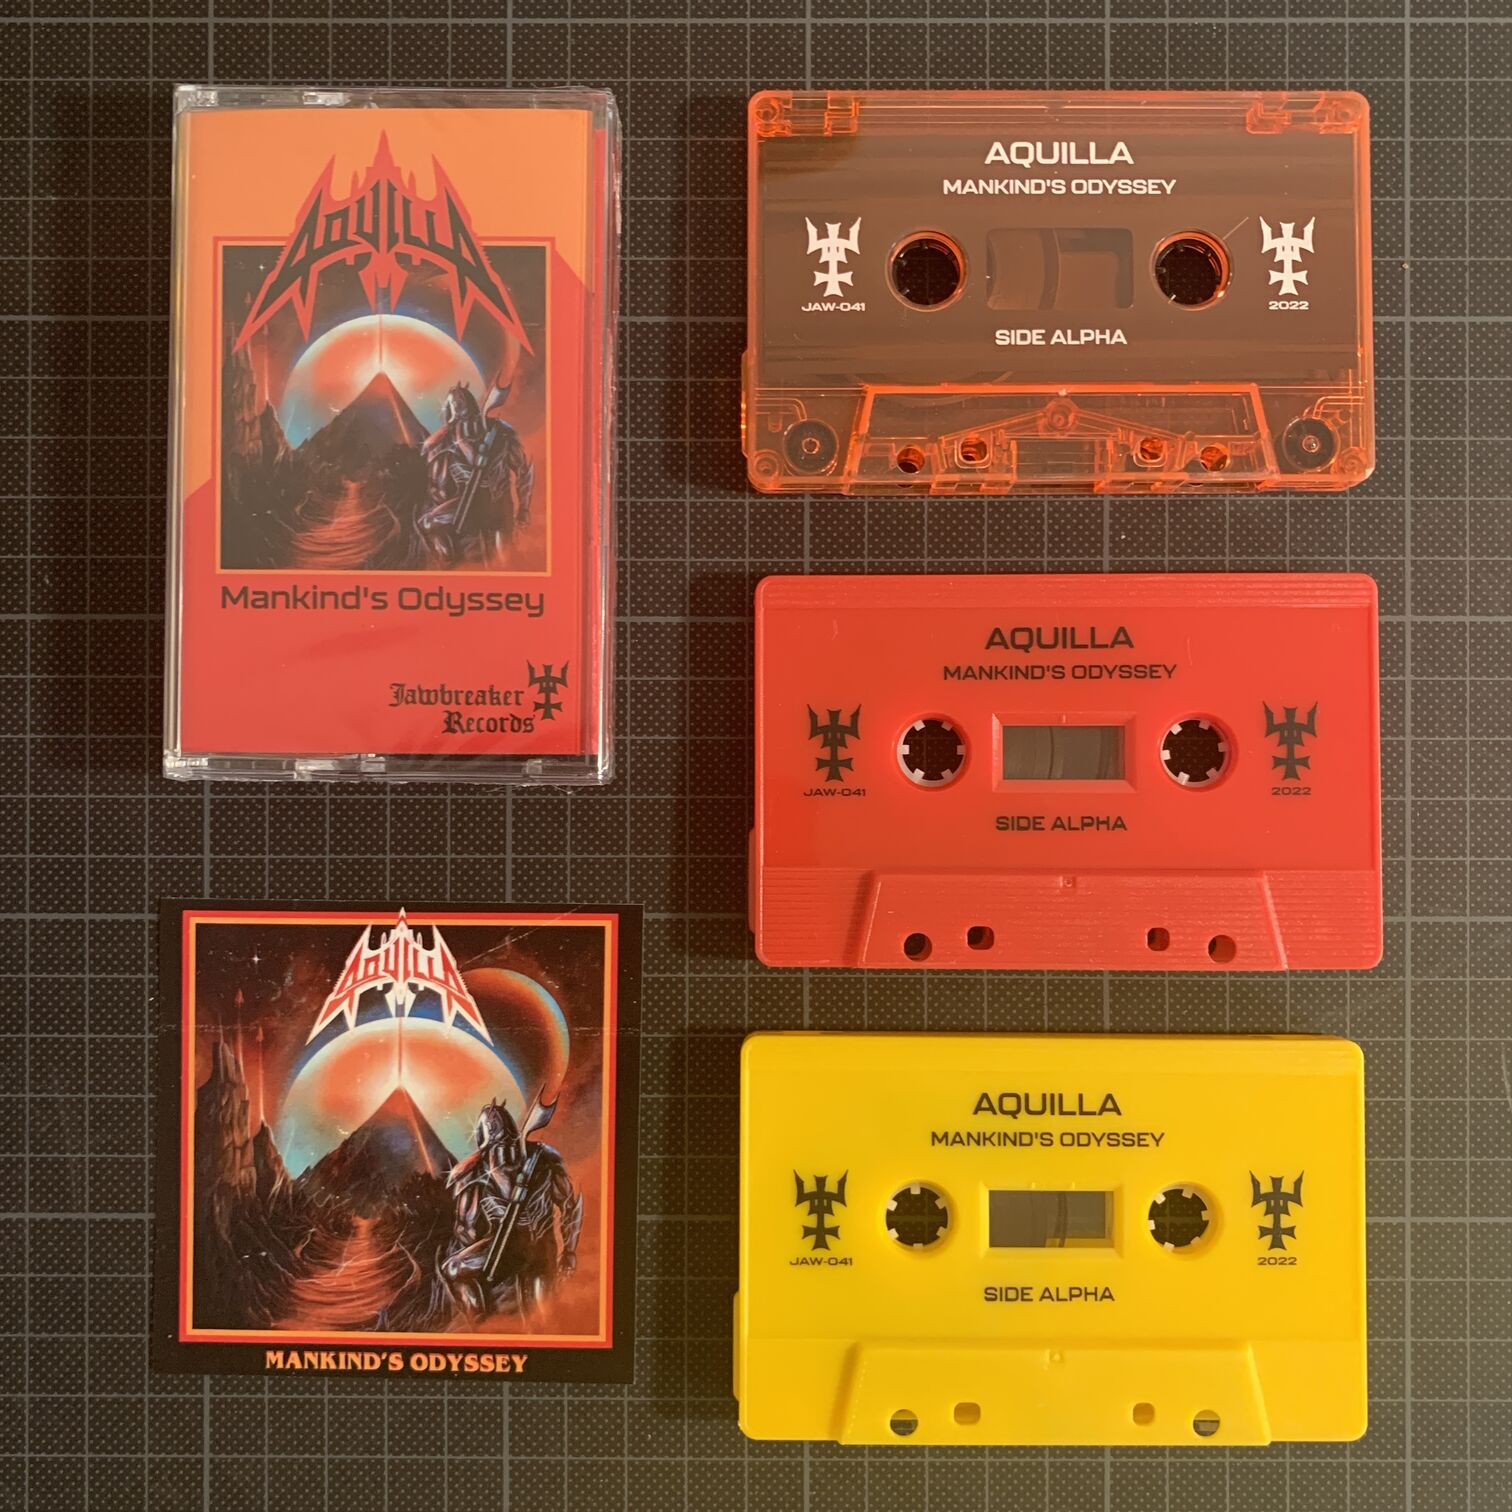 aquilla mankinds odyssey tape cassette jawbreaker records